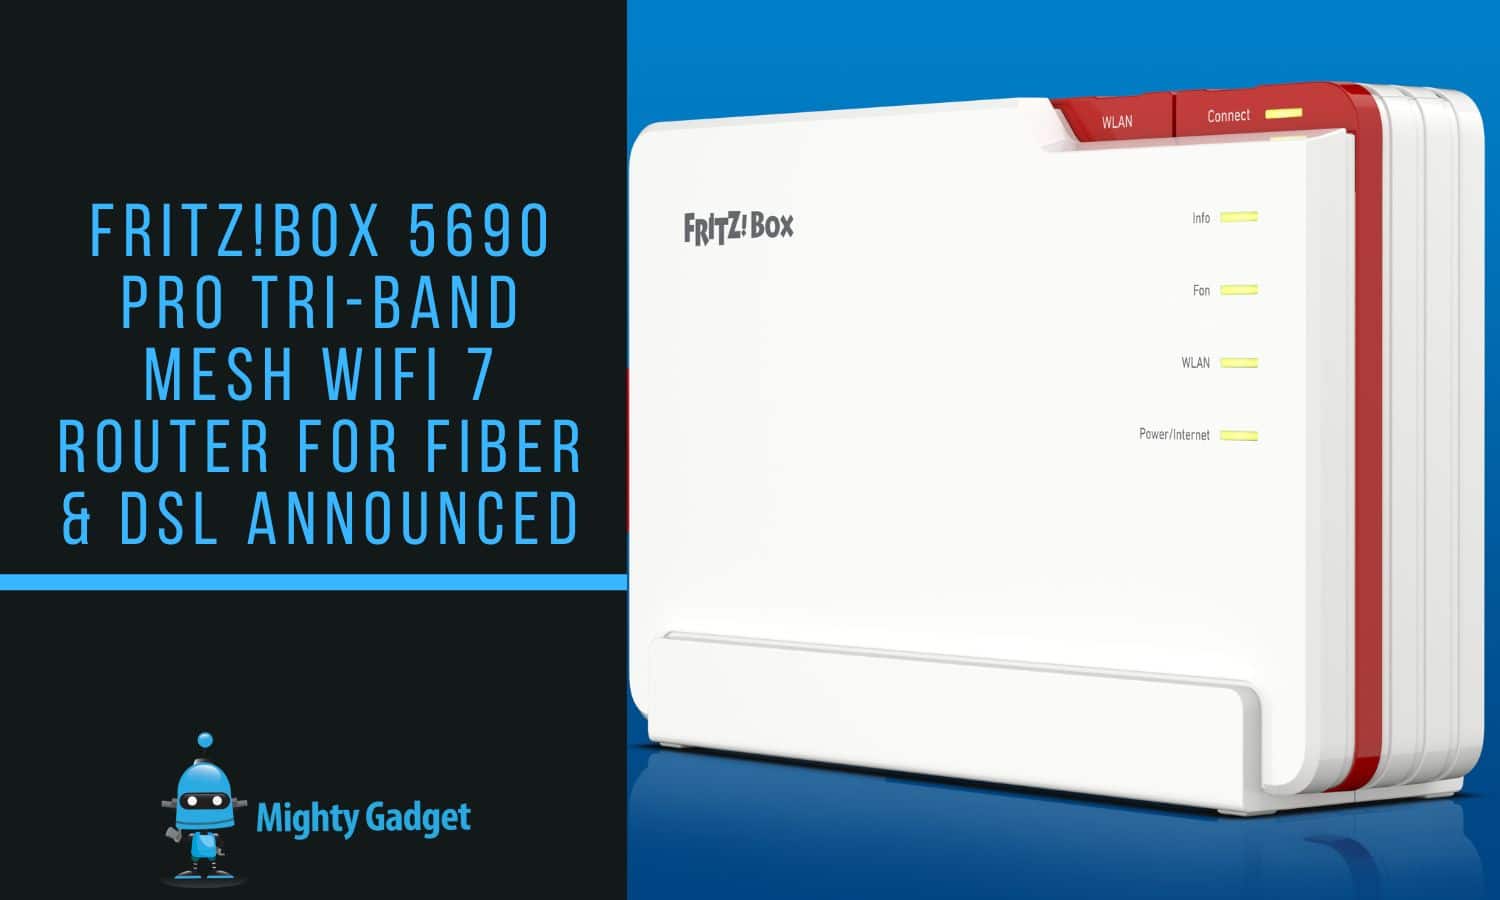 FRITZBox 5690 Pro Tri Band Mesh WiFi 7 Router for Fiber DSL Announced